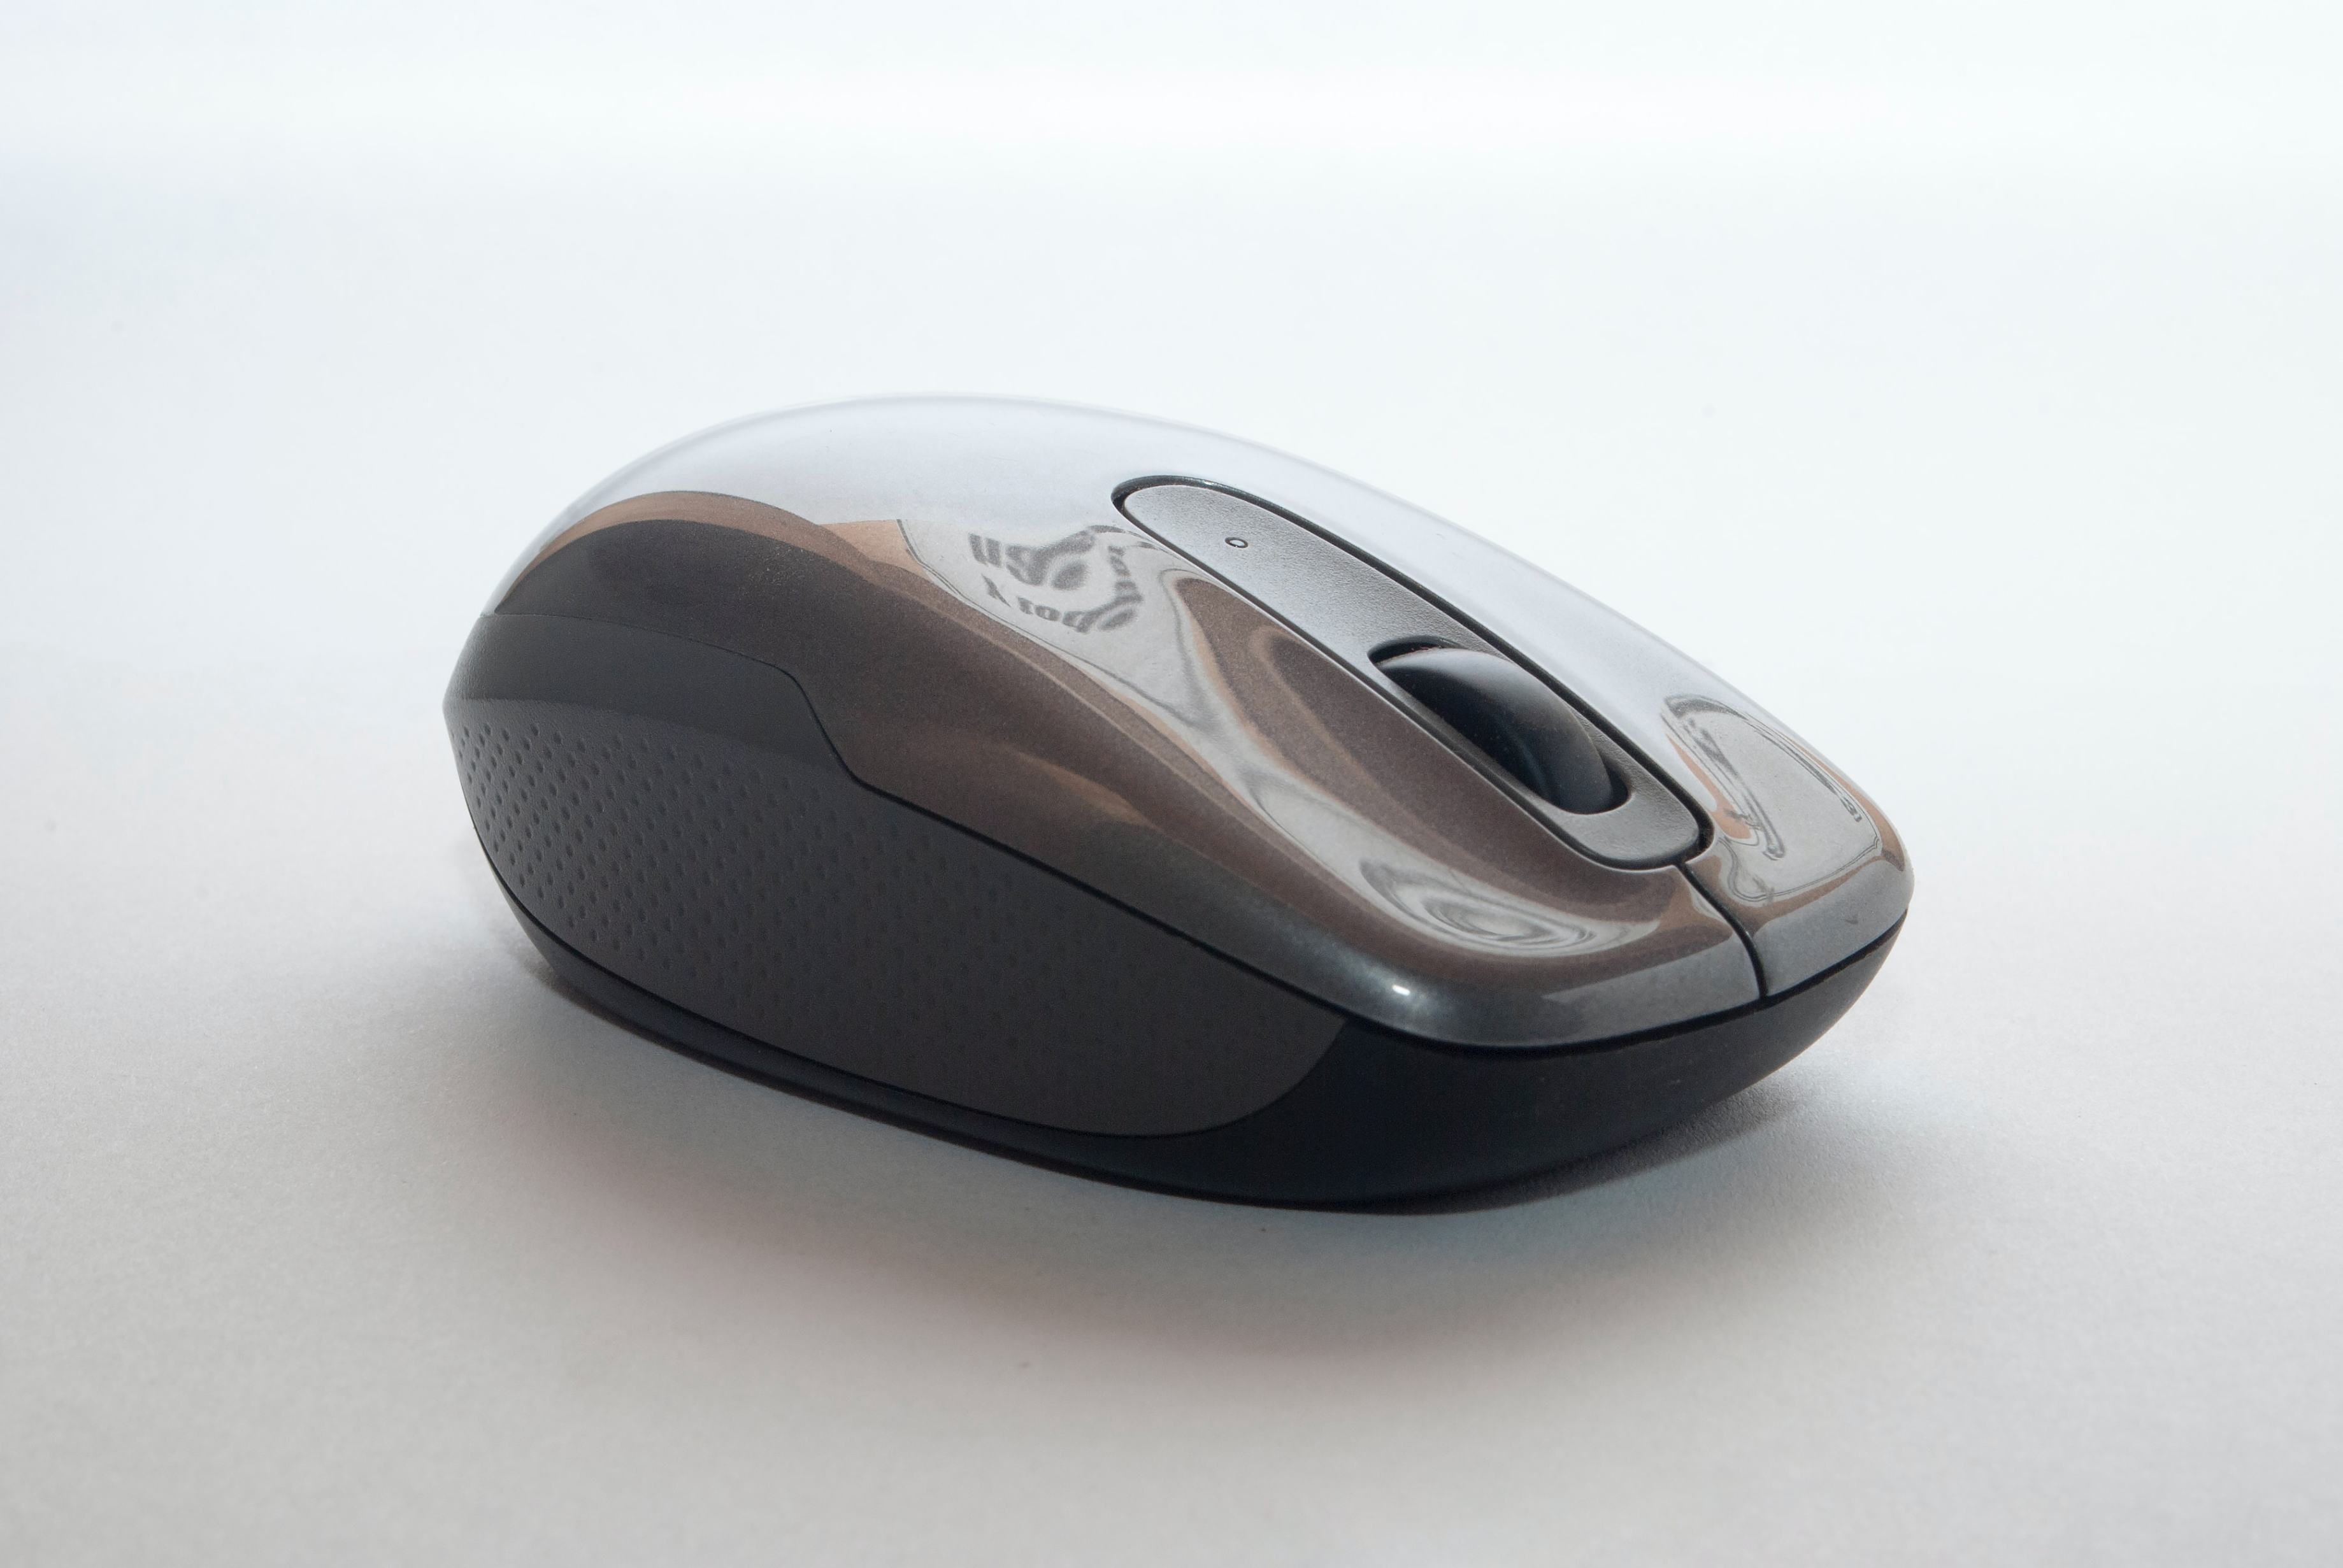 custom wireless mouse